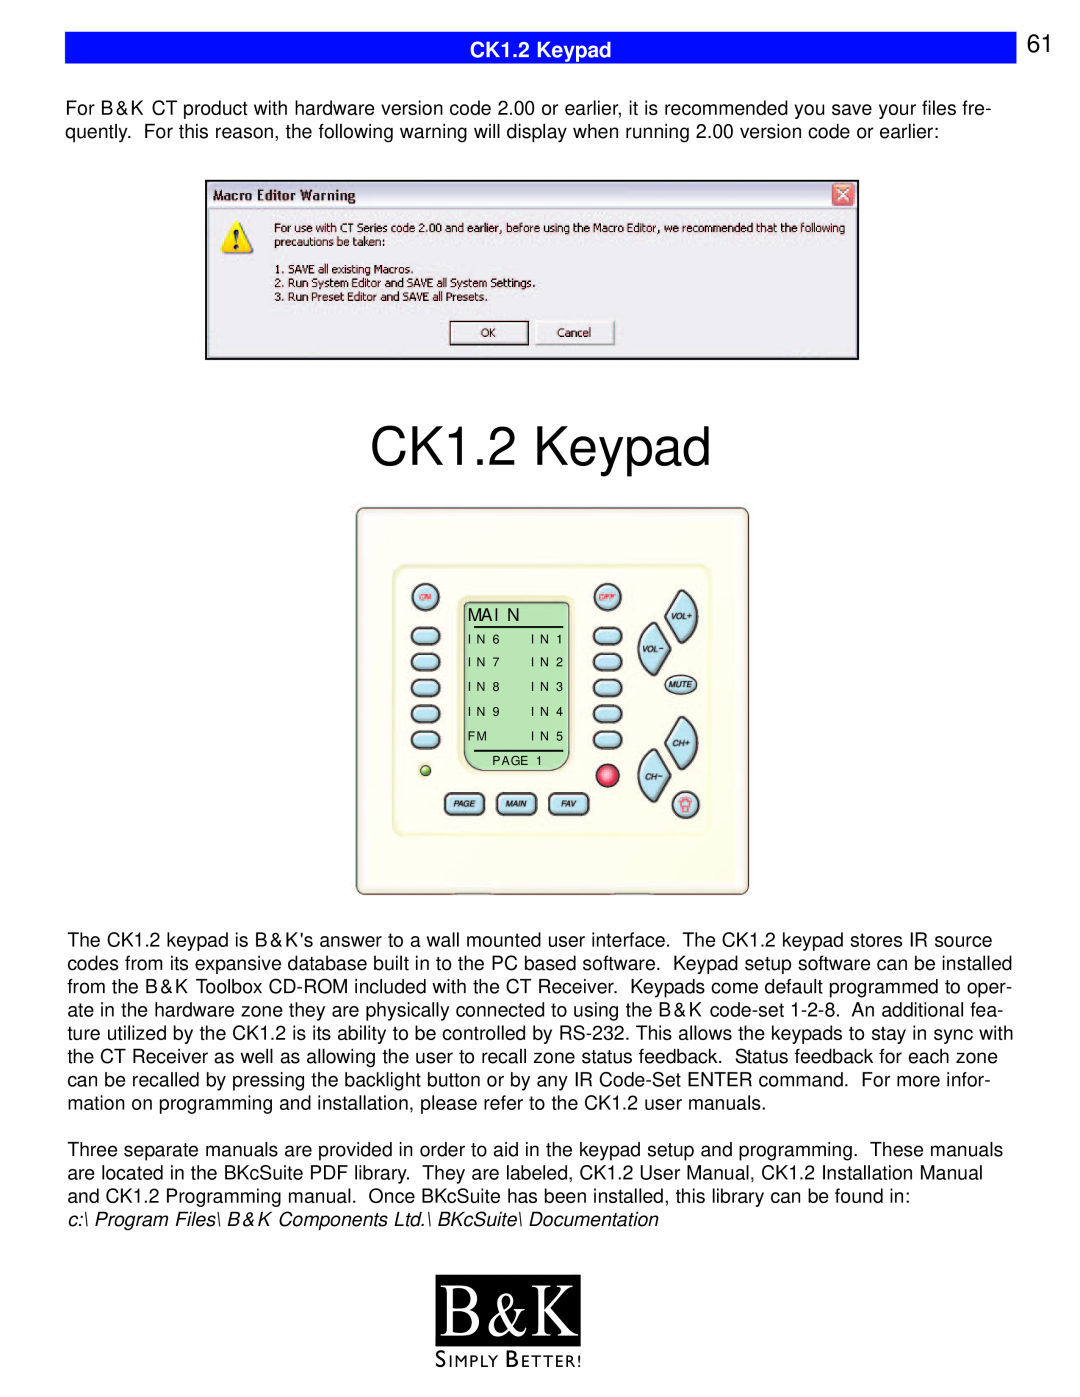 B&K CT600, CT602, CT310, CT610, CT300 user manual B & K, CK1.2 Keypad 